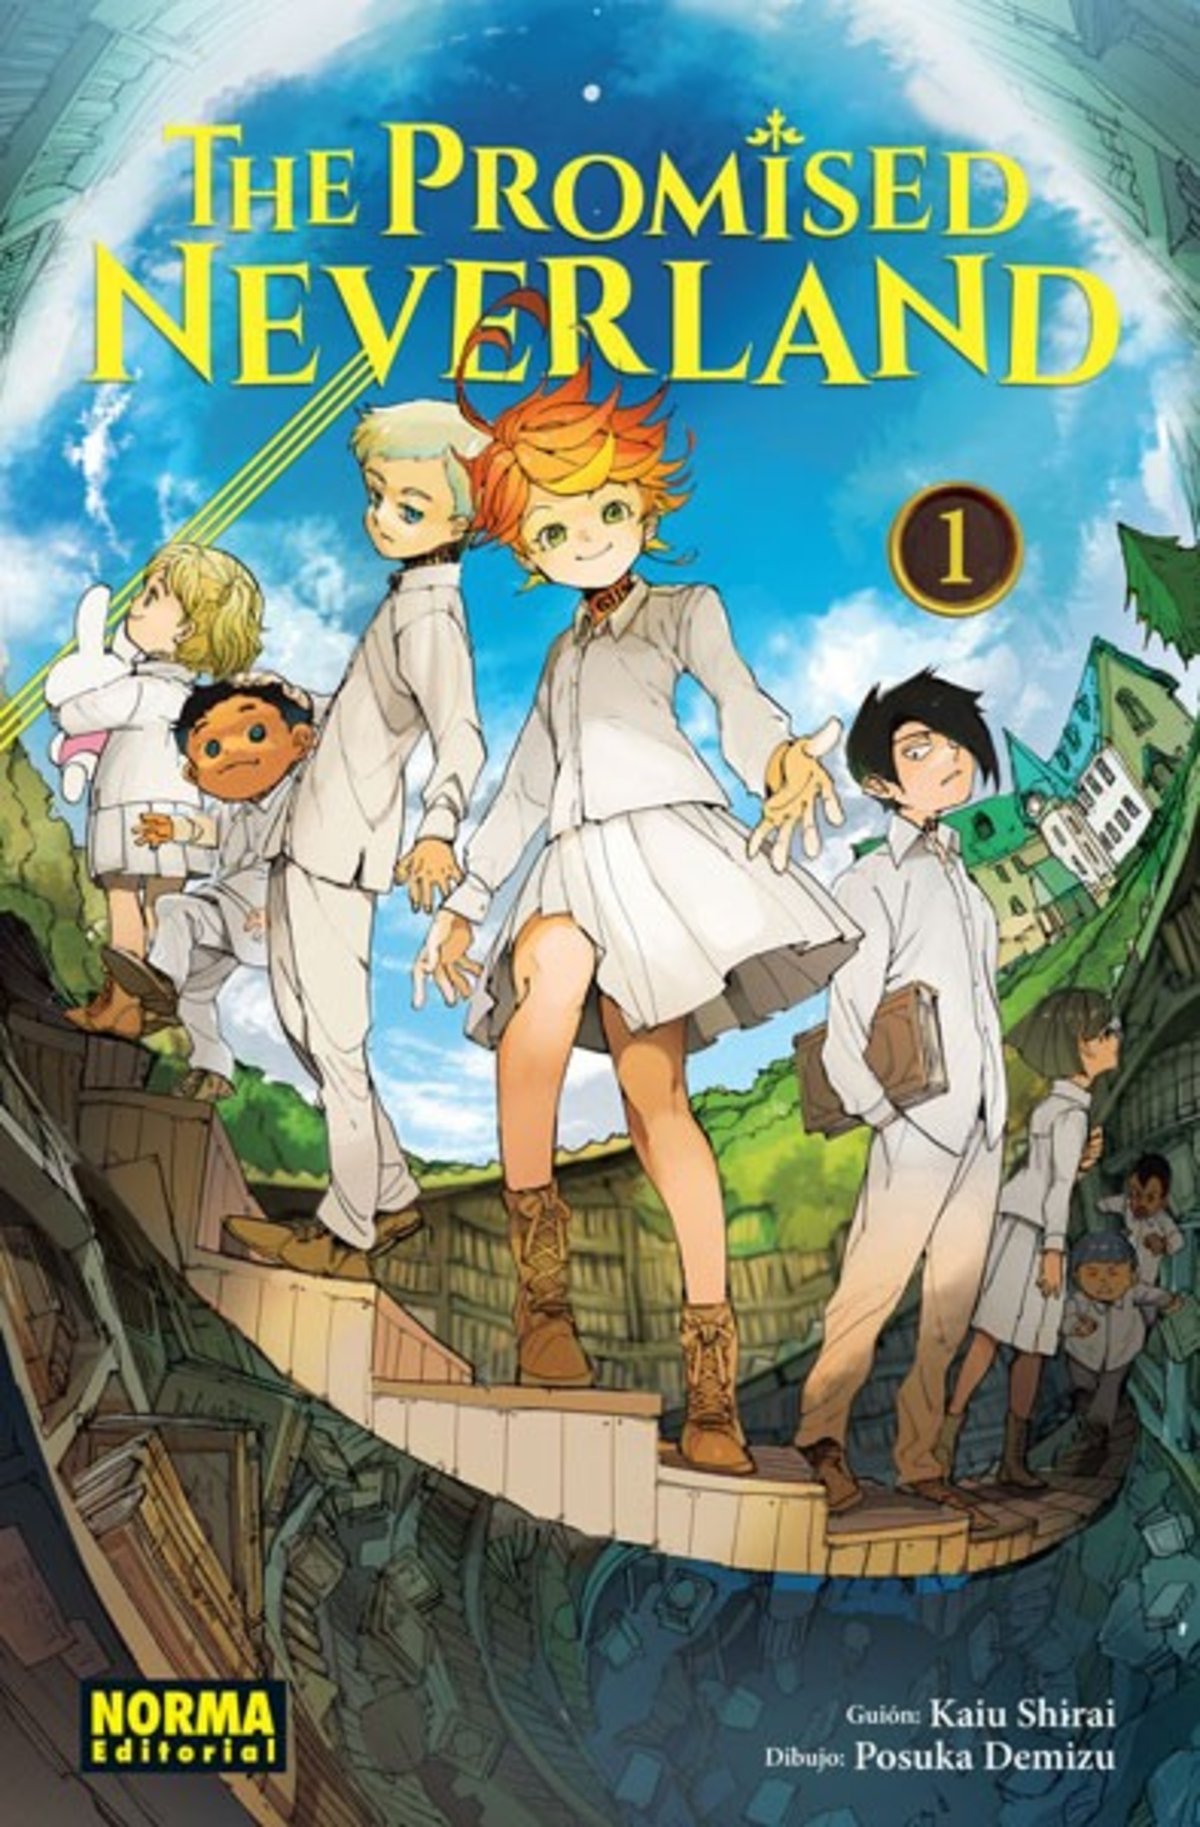 No Solo Gaming: The Promised Neverland de Kaiu Shirai y Posuka Demizu